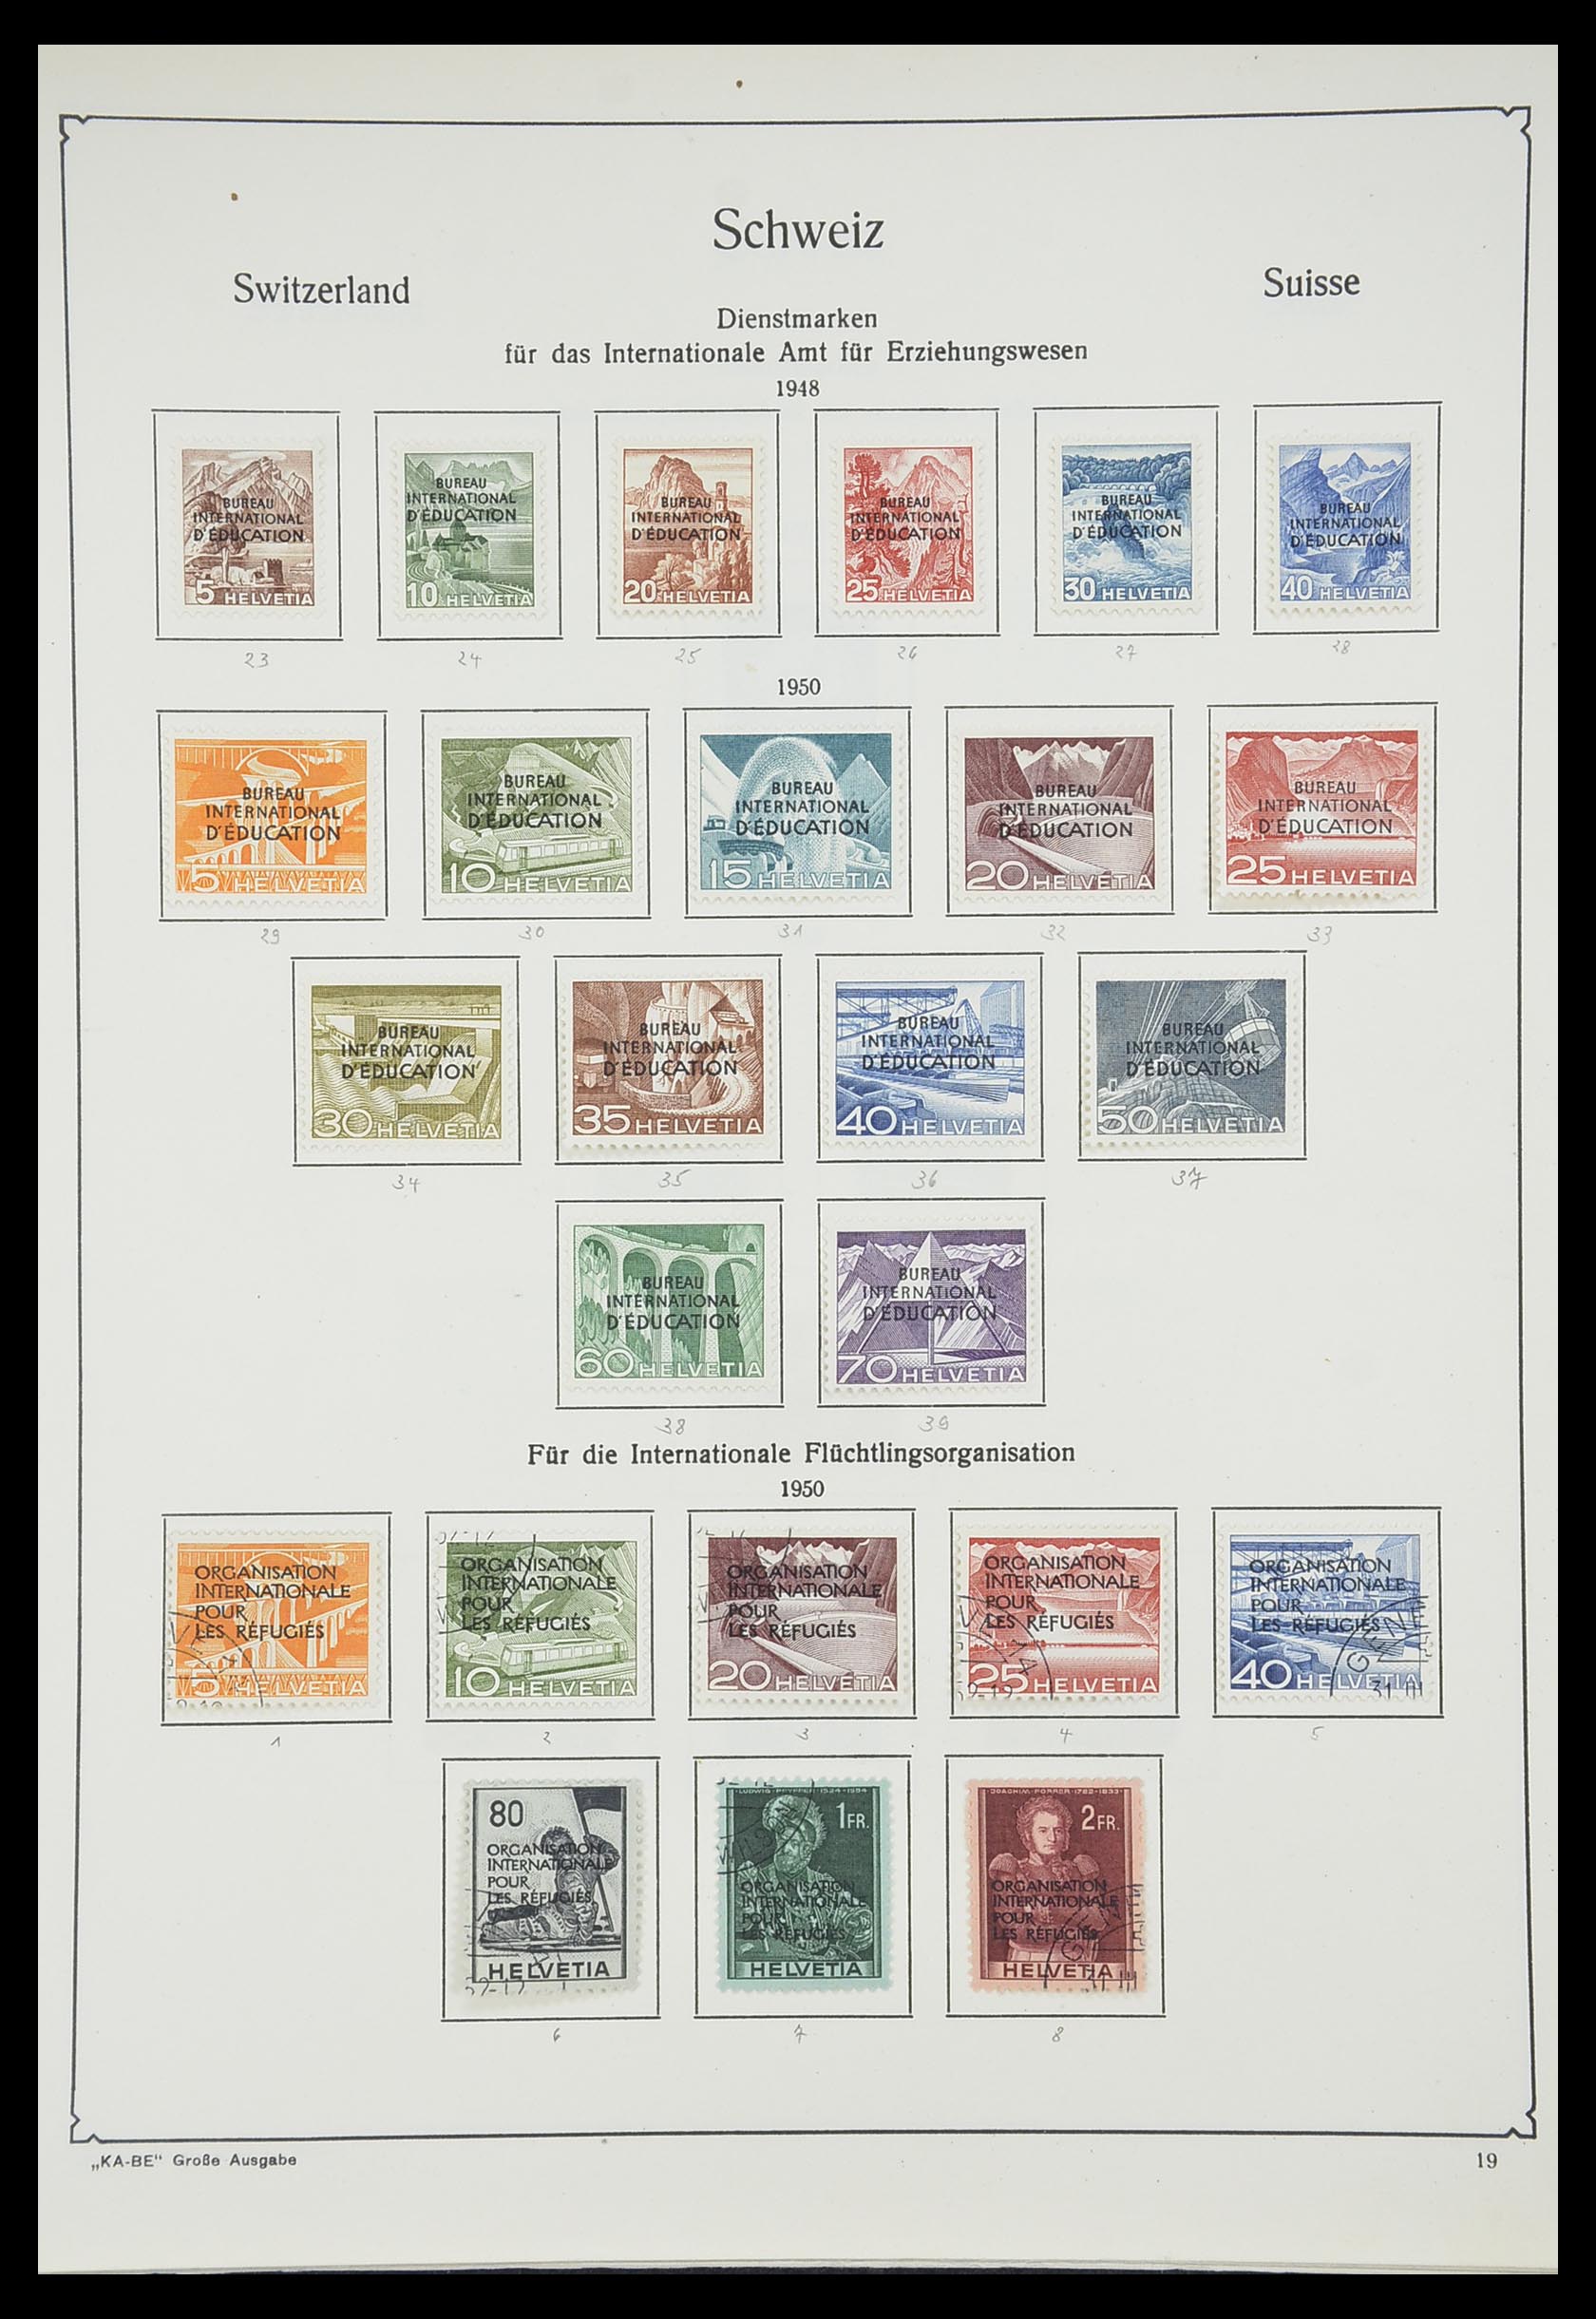 33327 020 - Stamp collection 33327 Switzerland service 1922-1989.